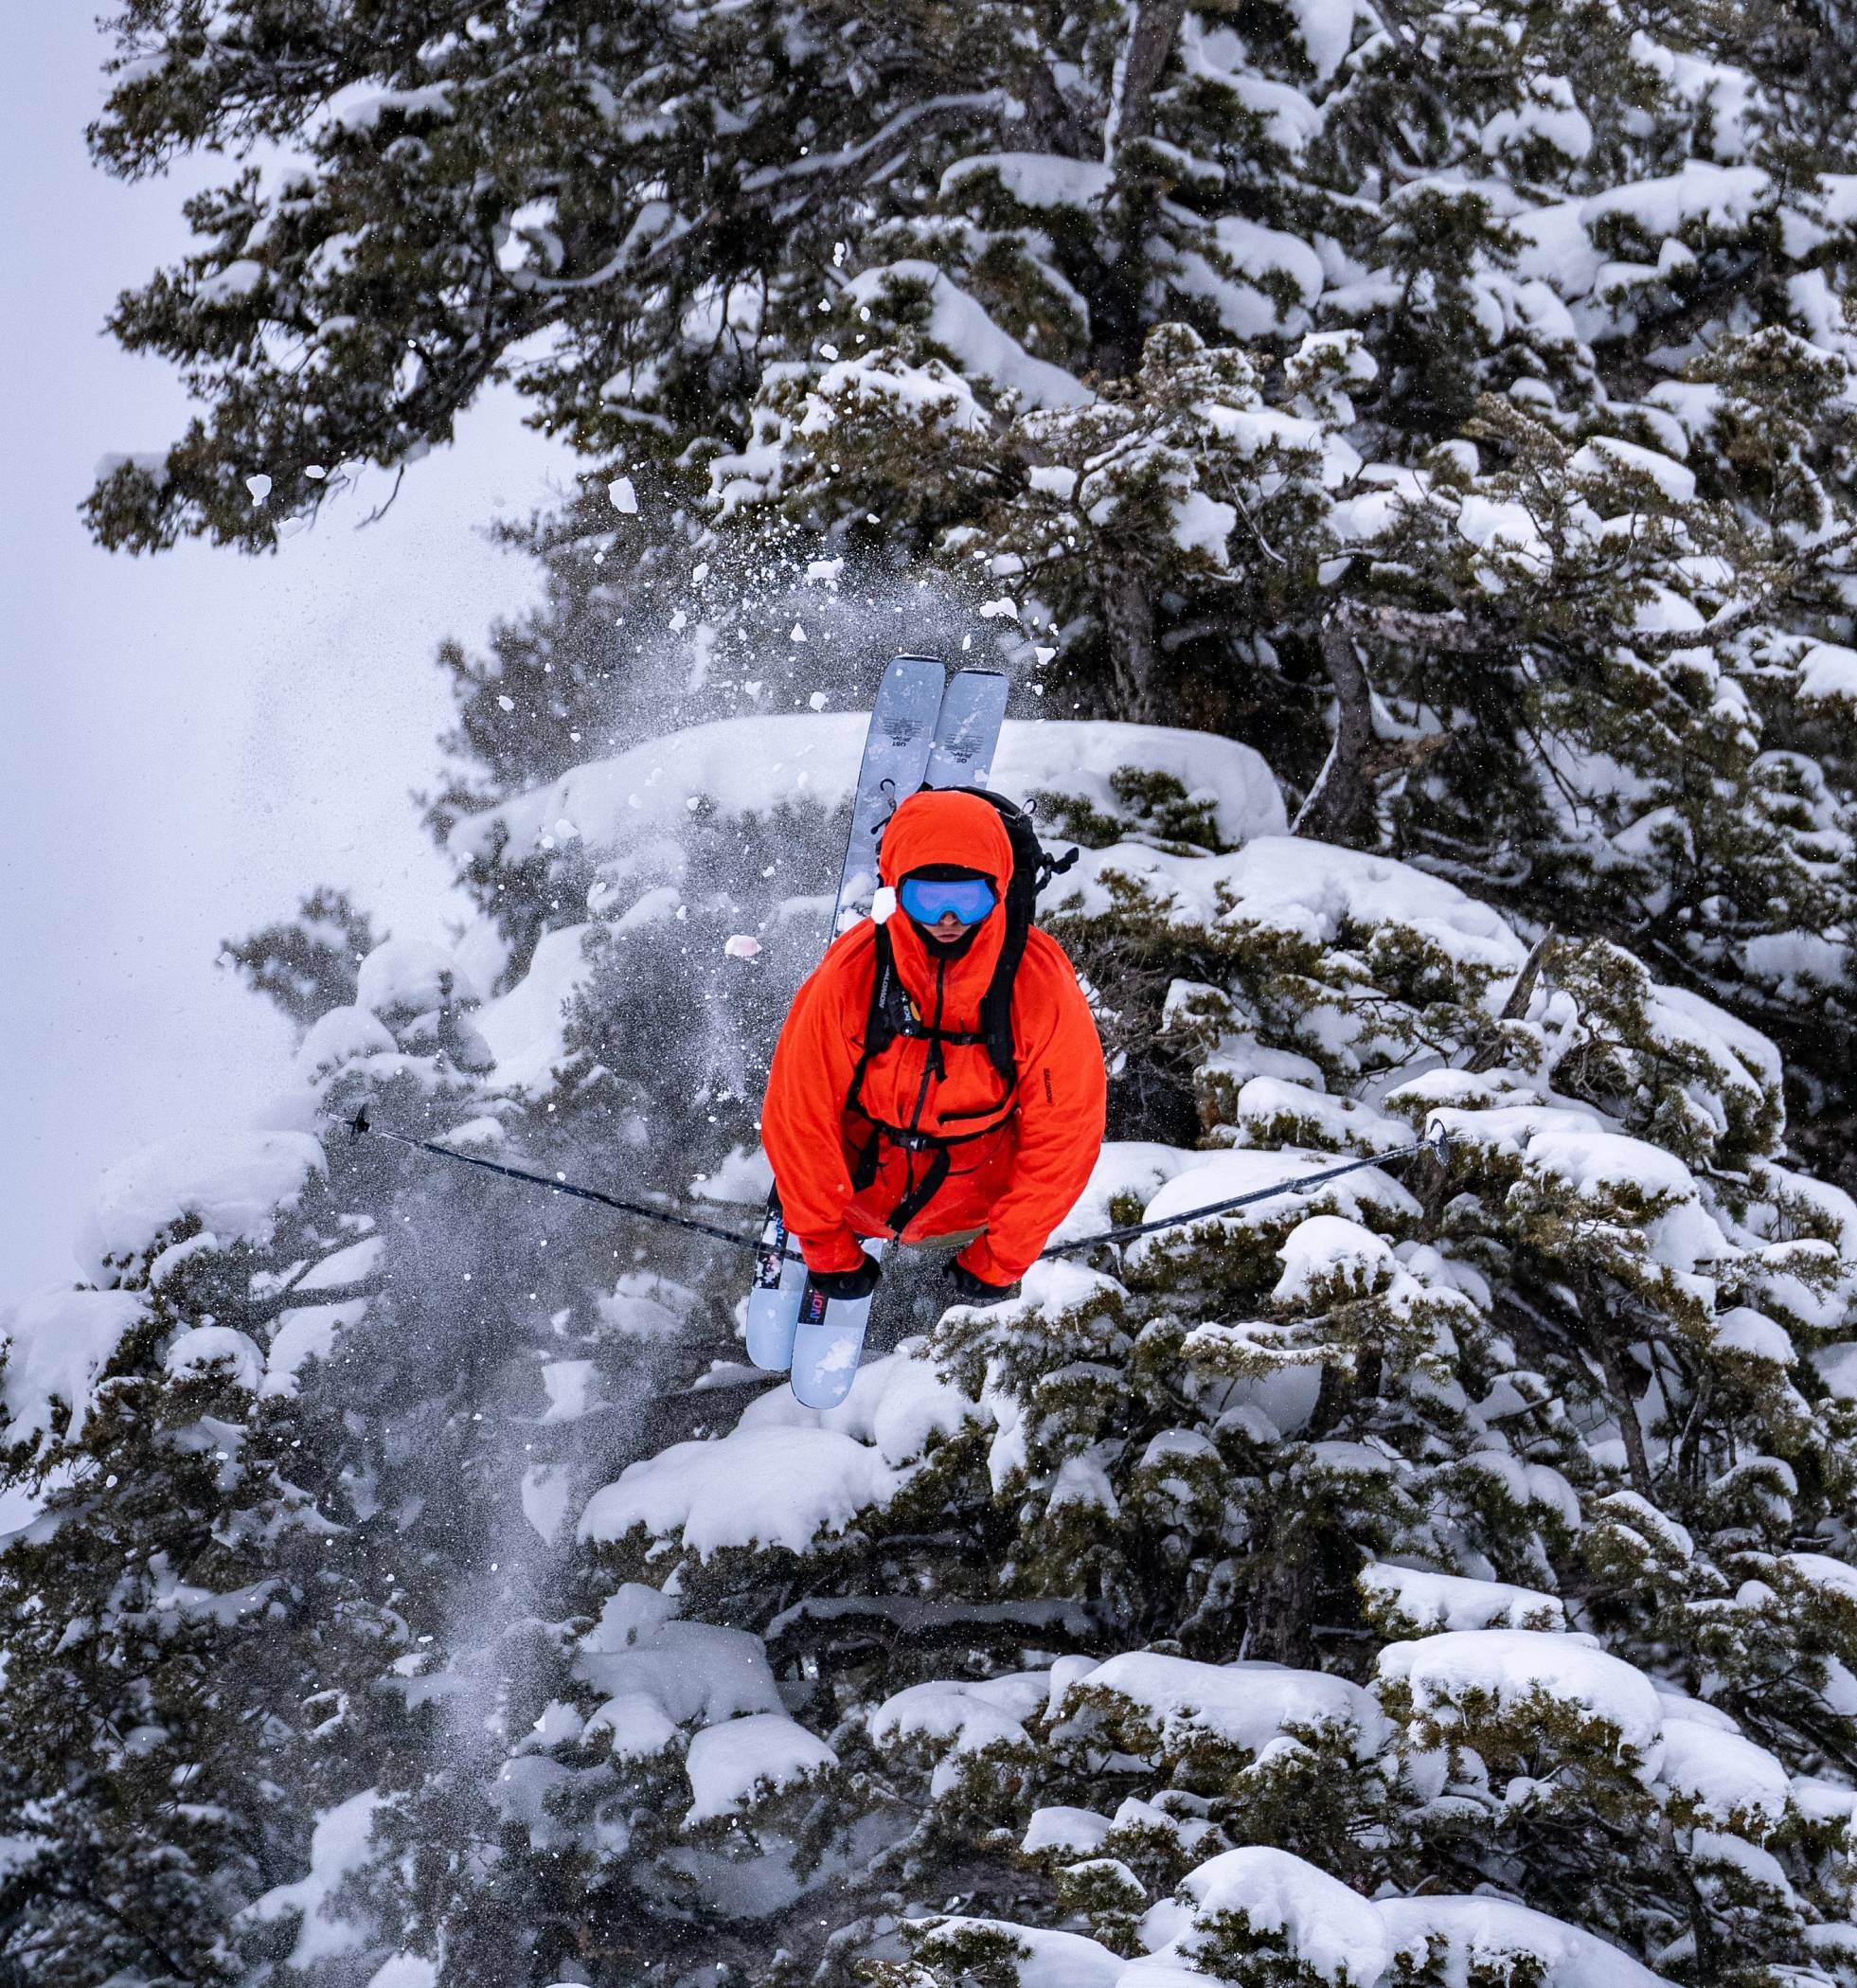 snowboarder riding powder